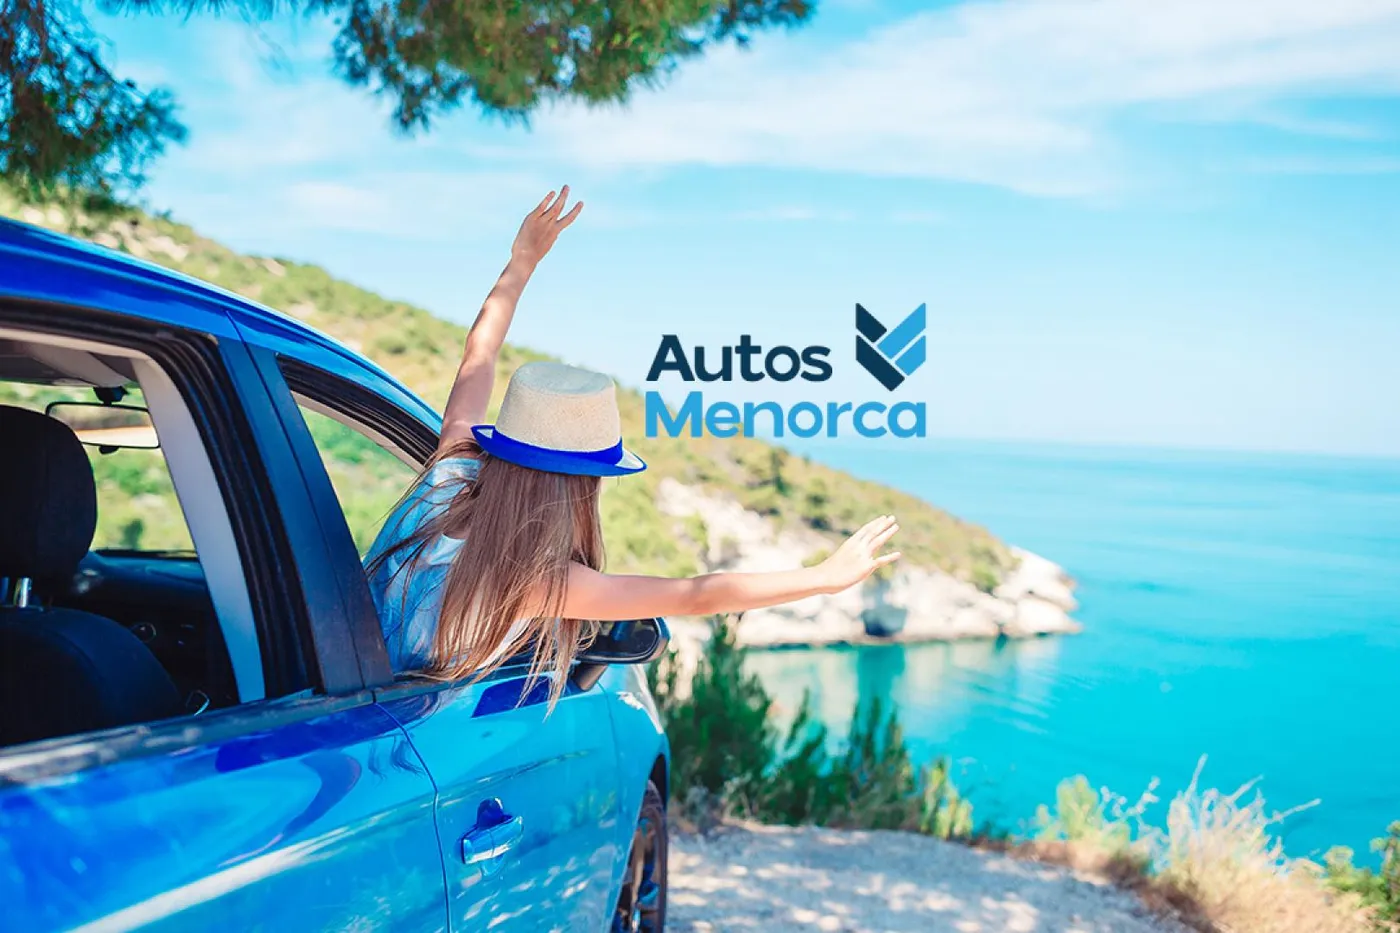 Image of Autos Menorca